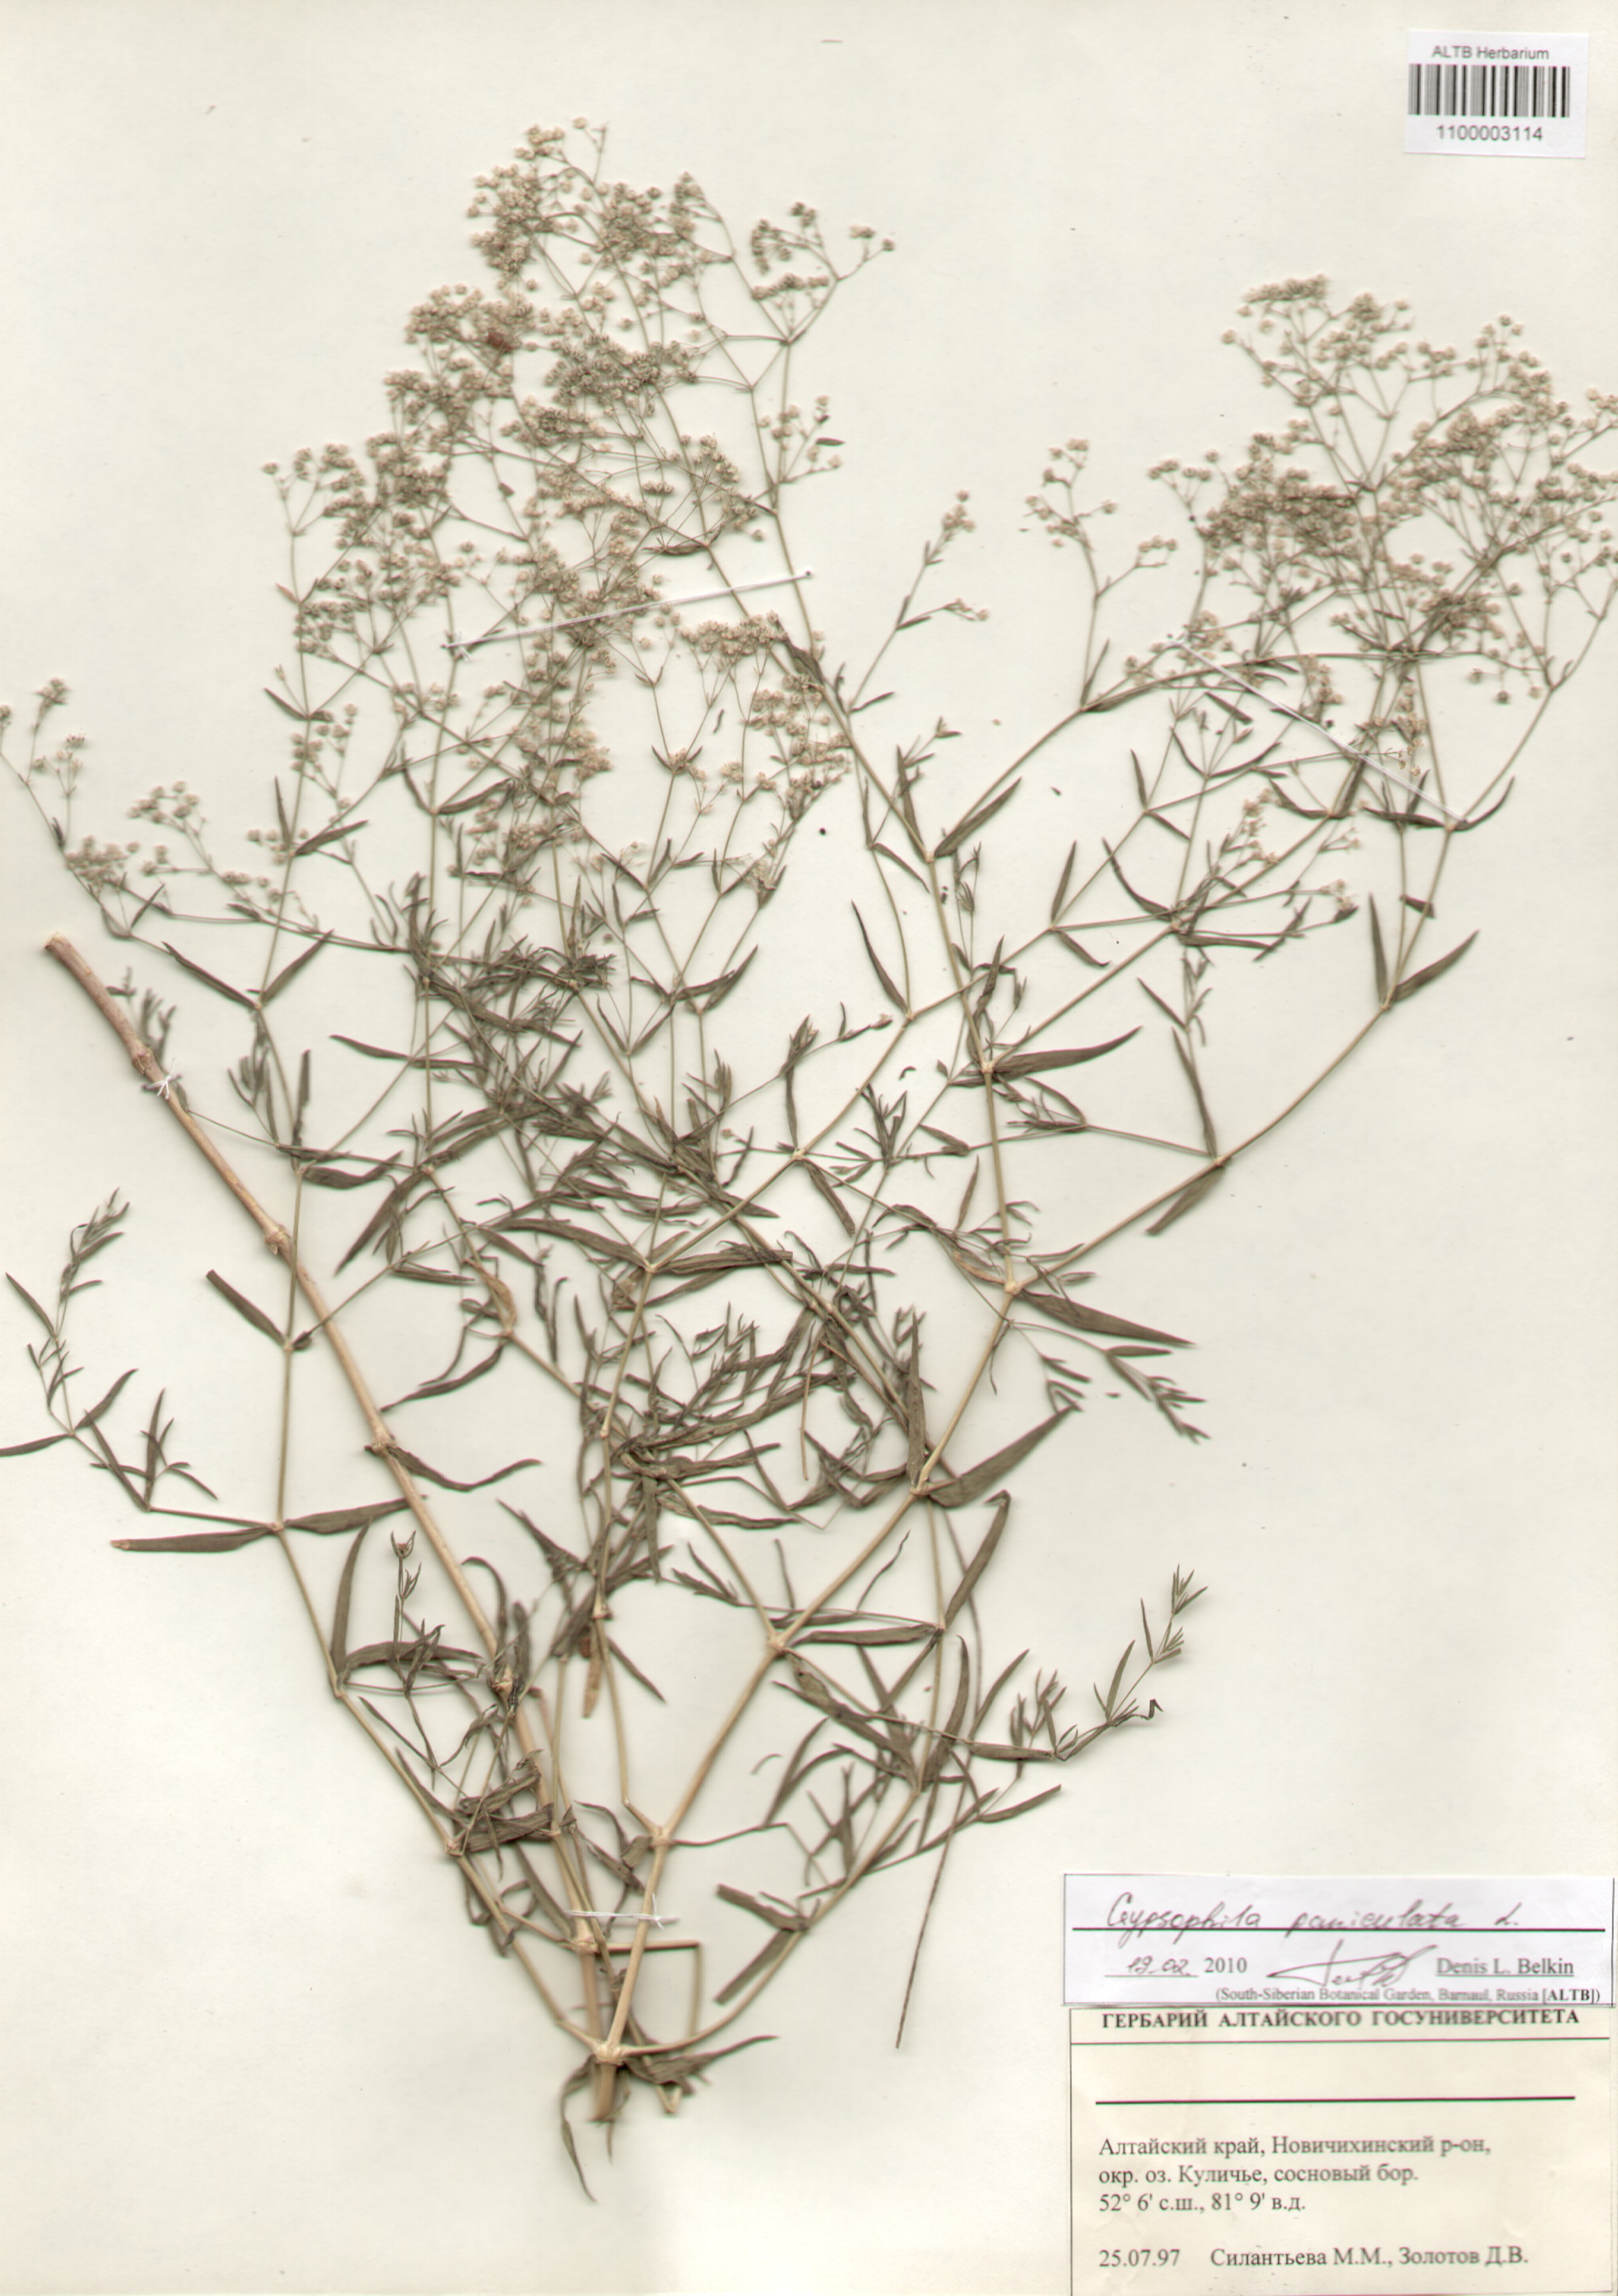 Caryophyllaceae,Gypsophila paniculata L.